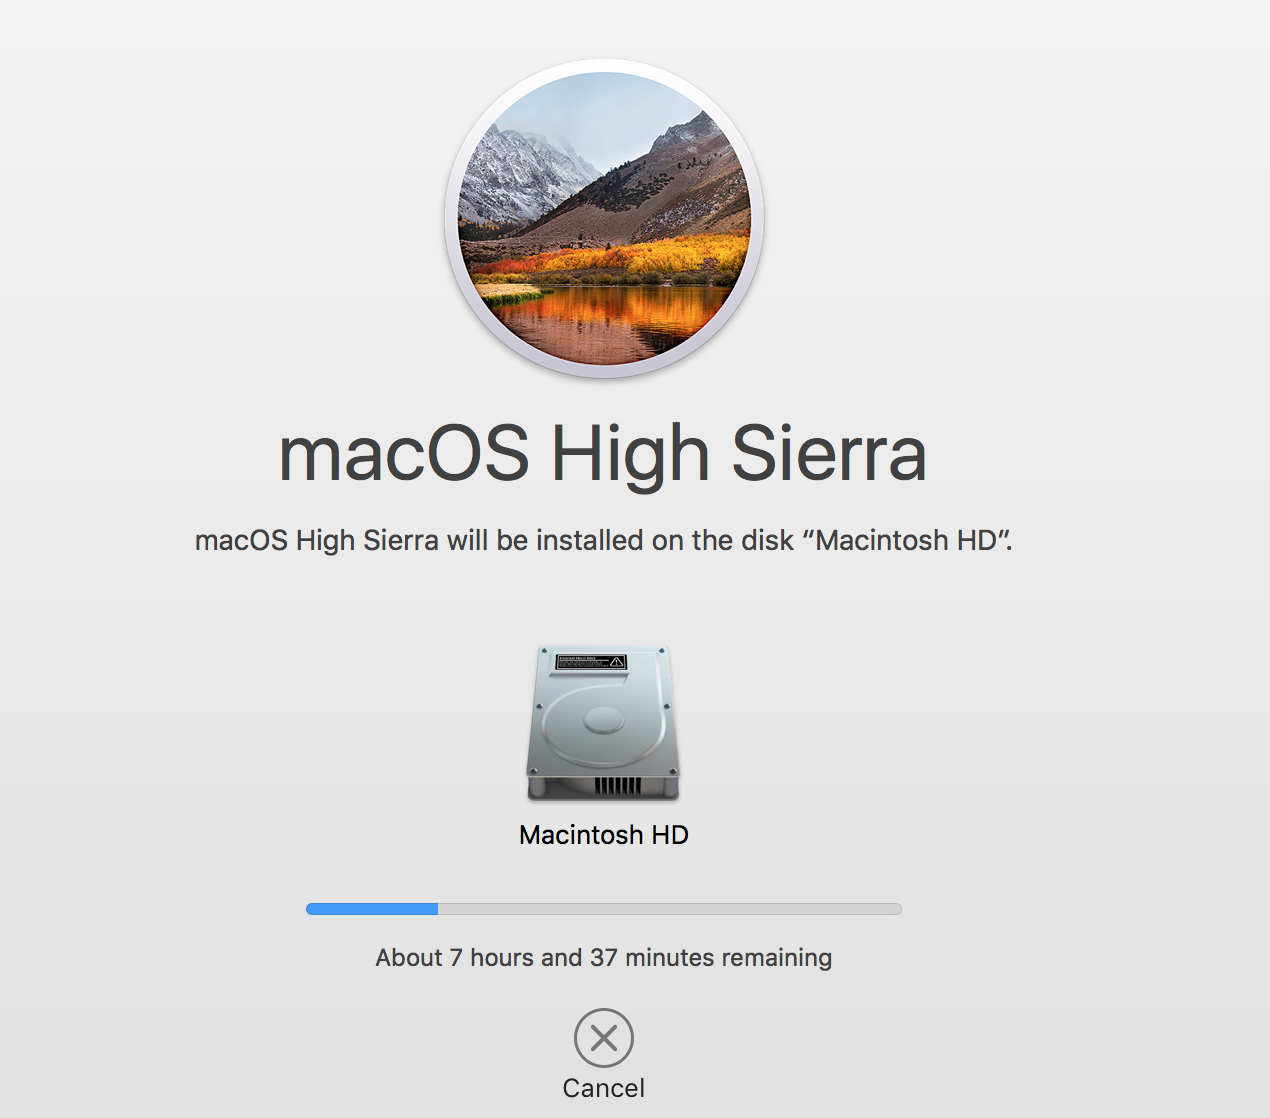 macOS High Sierra freezes